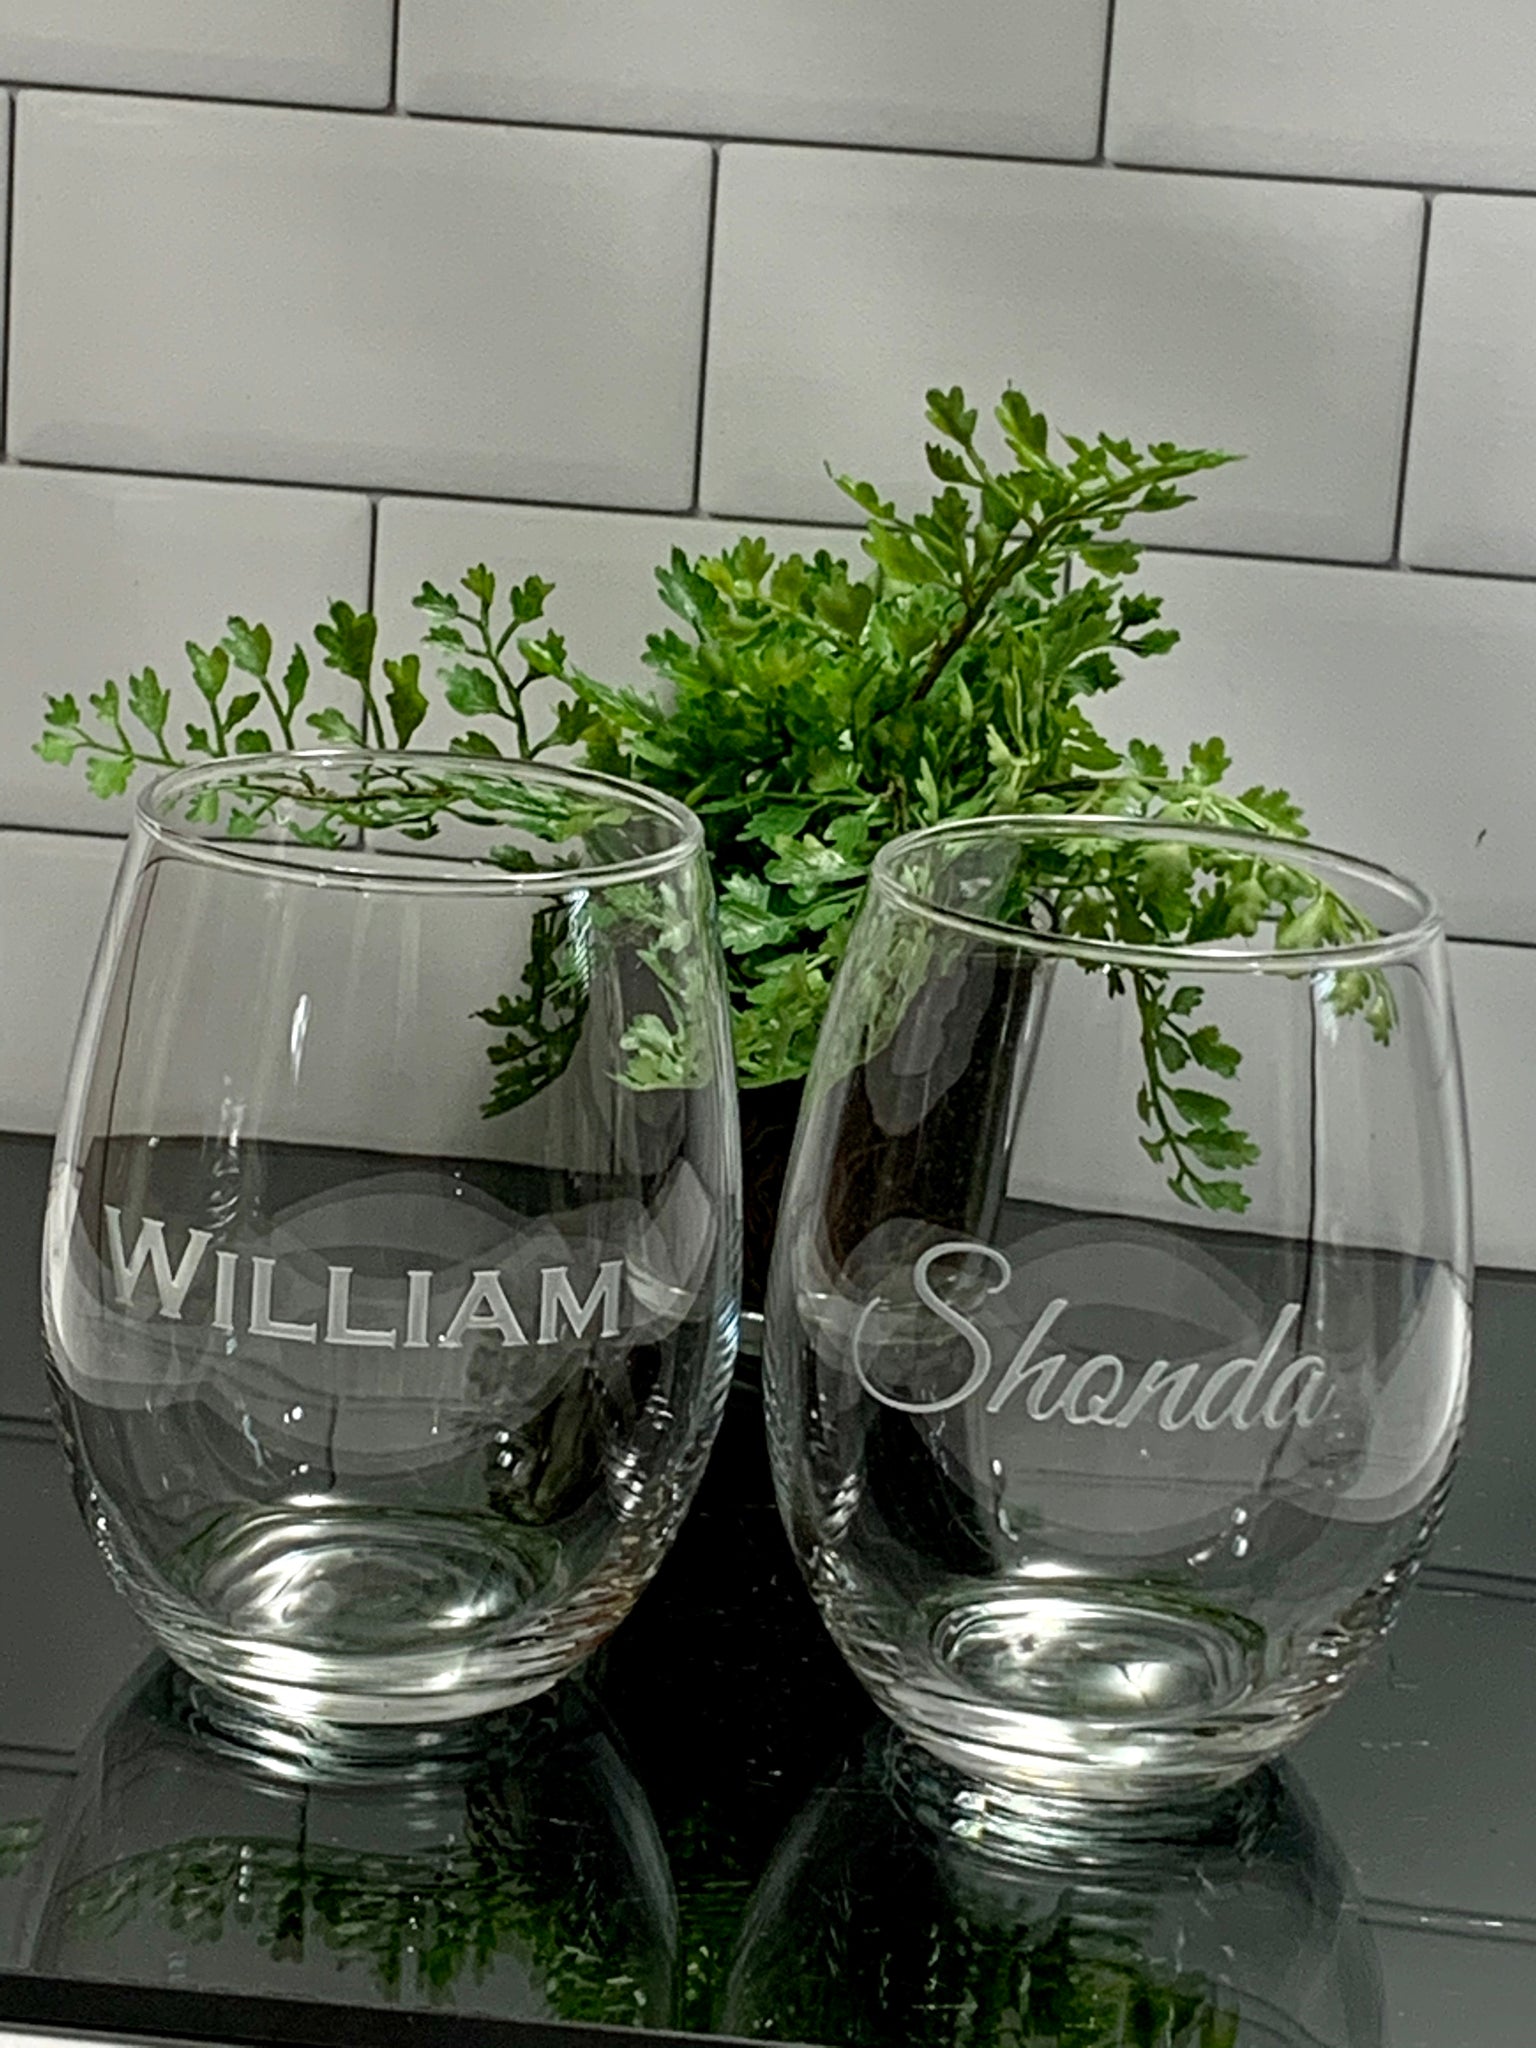 Wine Glasses 21oz, Stemless, set/4, personalized